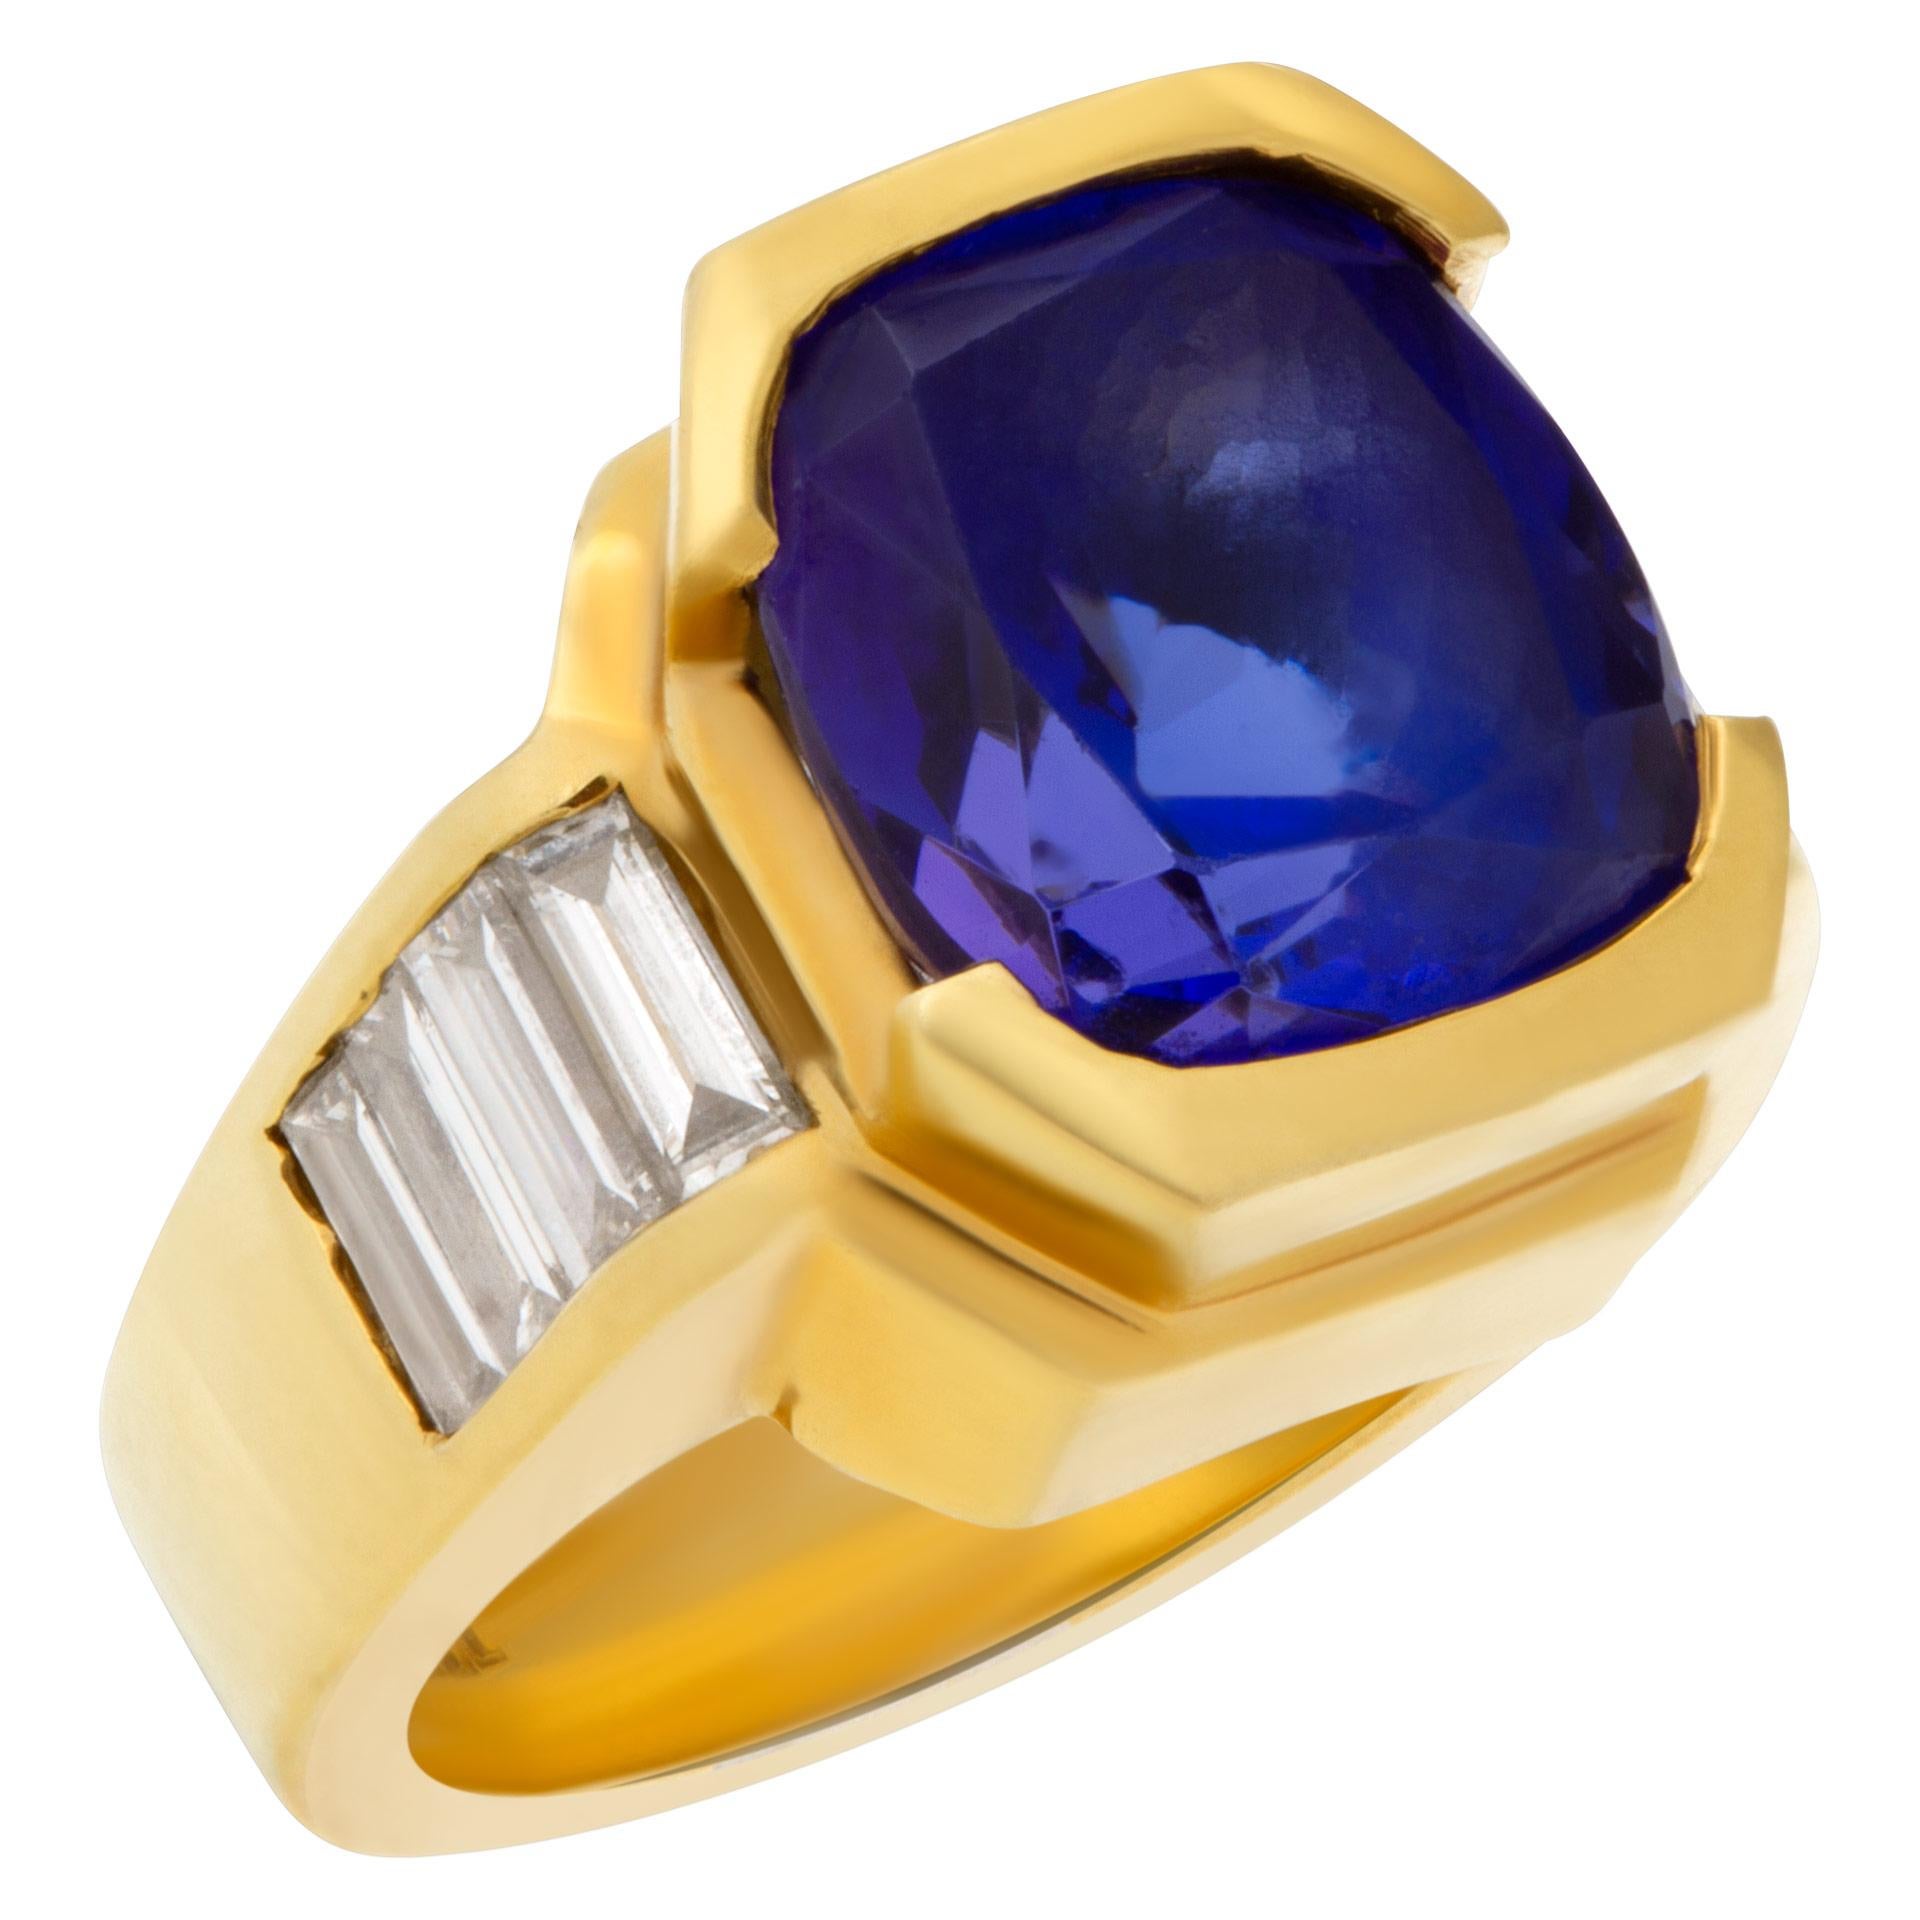 Antique Cushion Cut AGL Certified Striking Blue Gem Tanzanite 9.52 Carat Diamond Ring